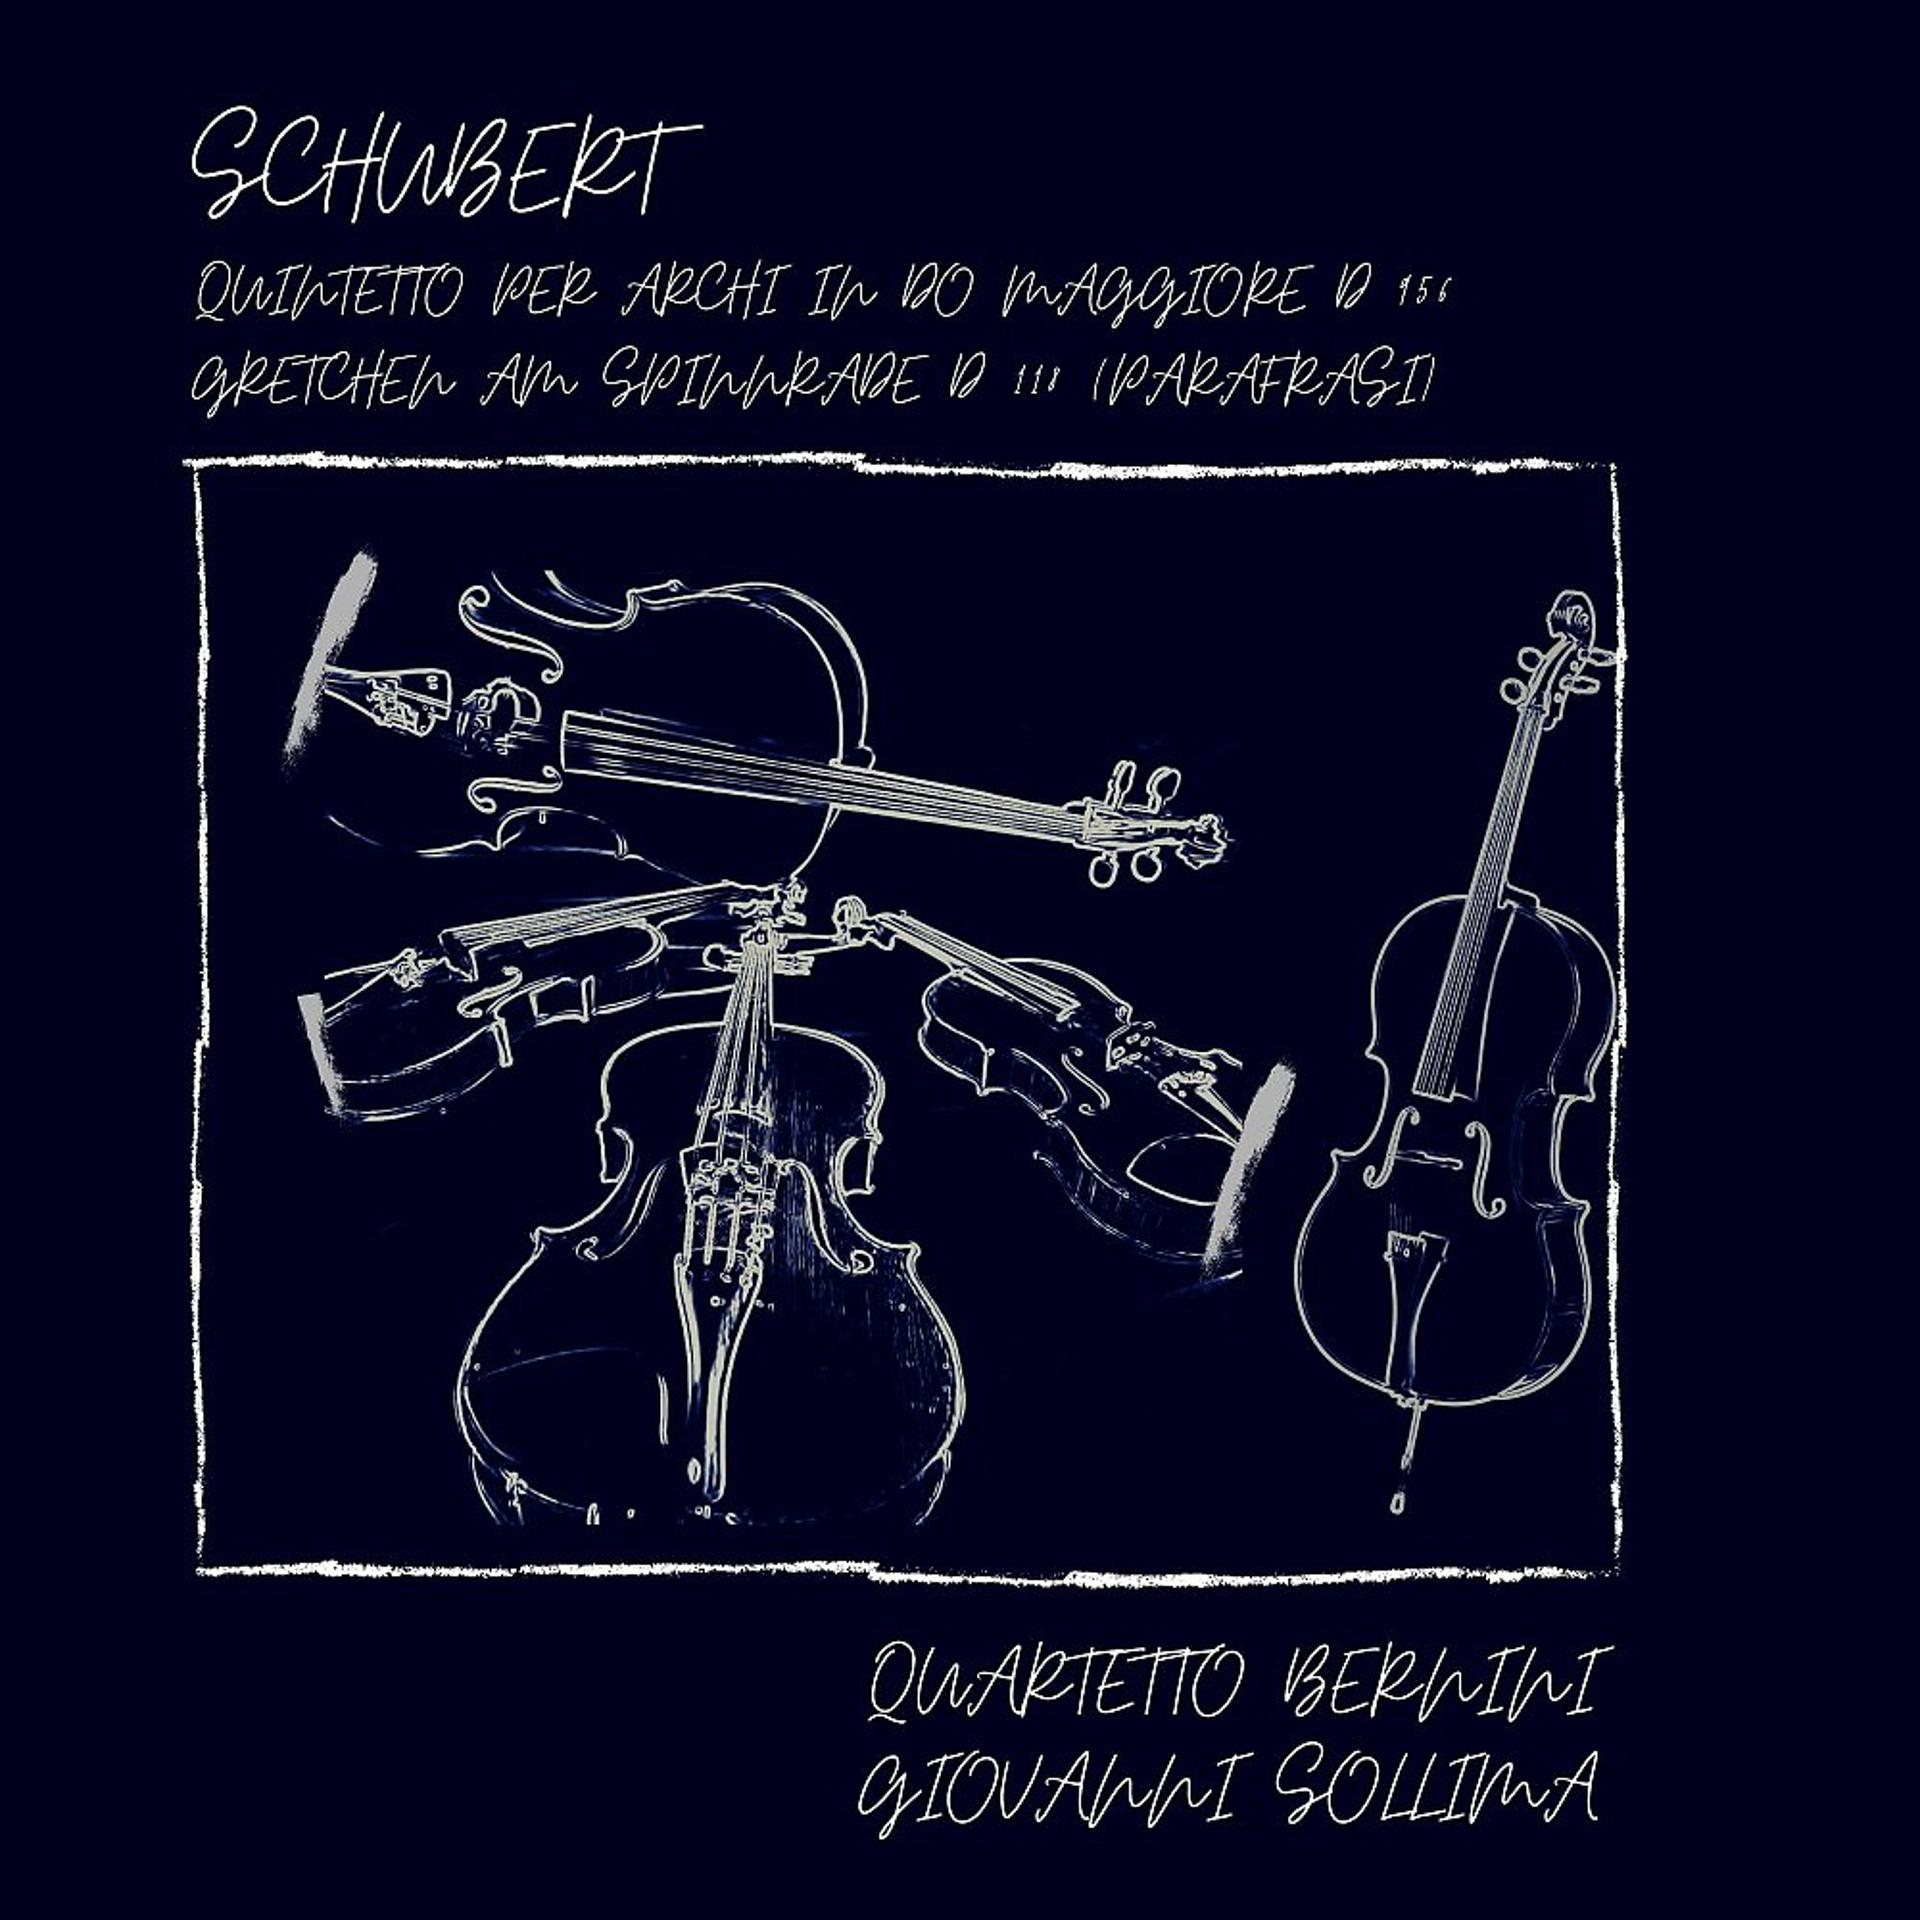 Постер альбома Schubert: Quintetto per archi in do maggiore, D.956; Gretchen am Spinnrade, D.118 (Parafrasi)